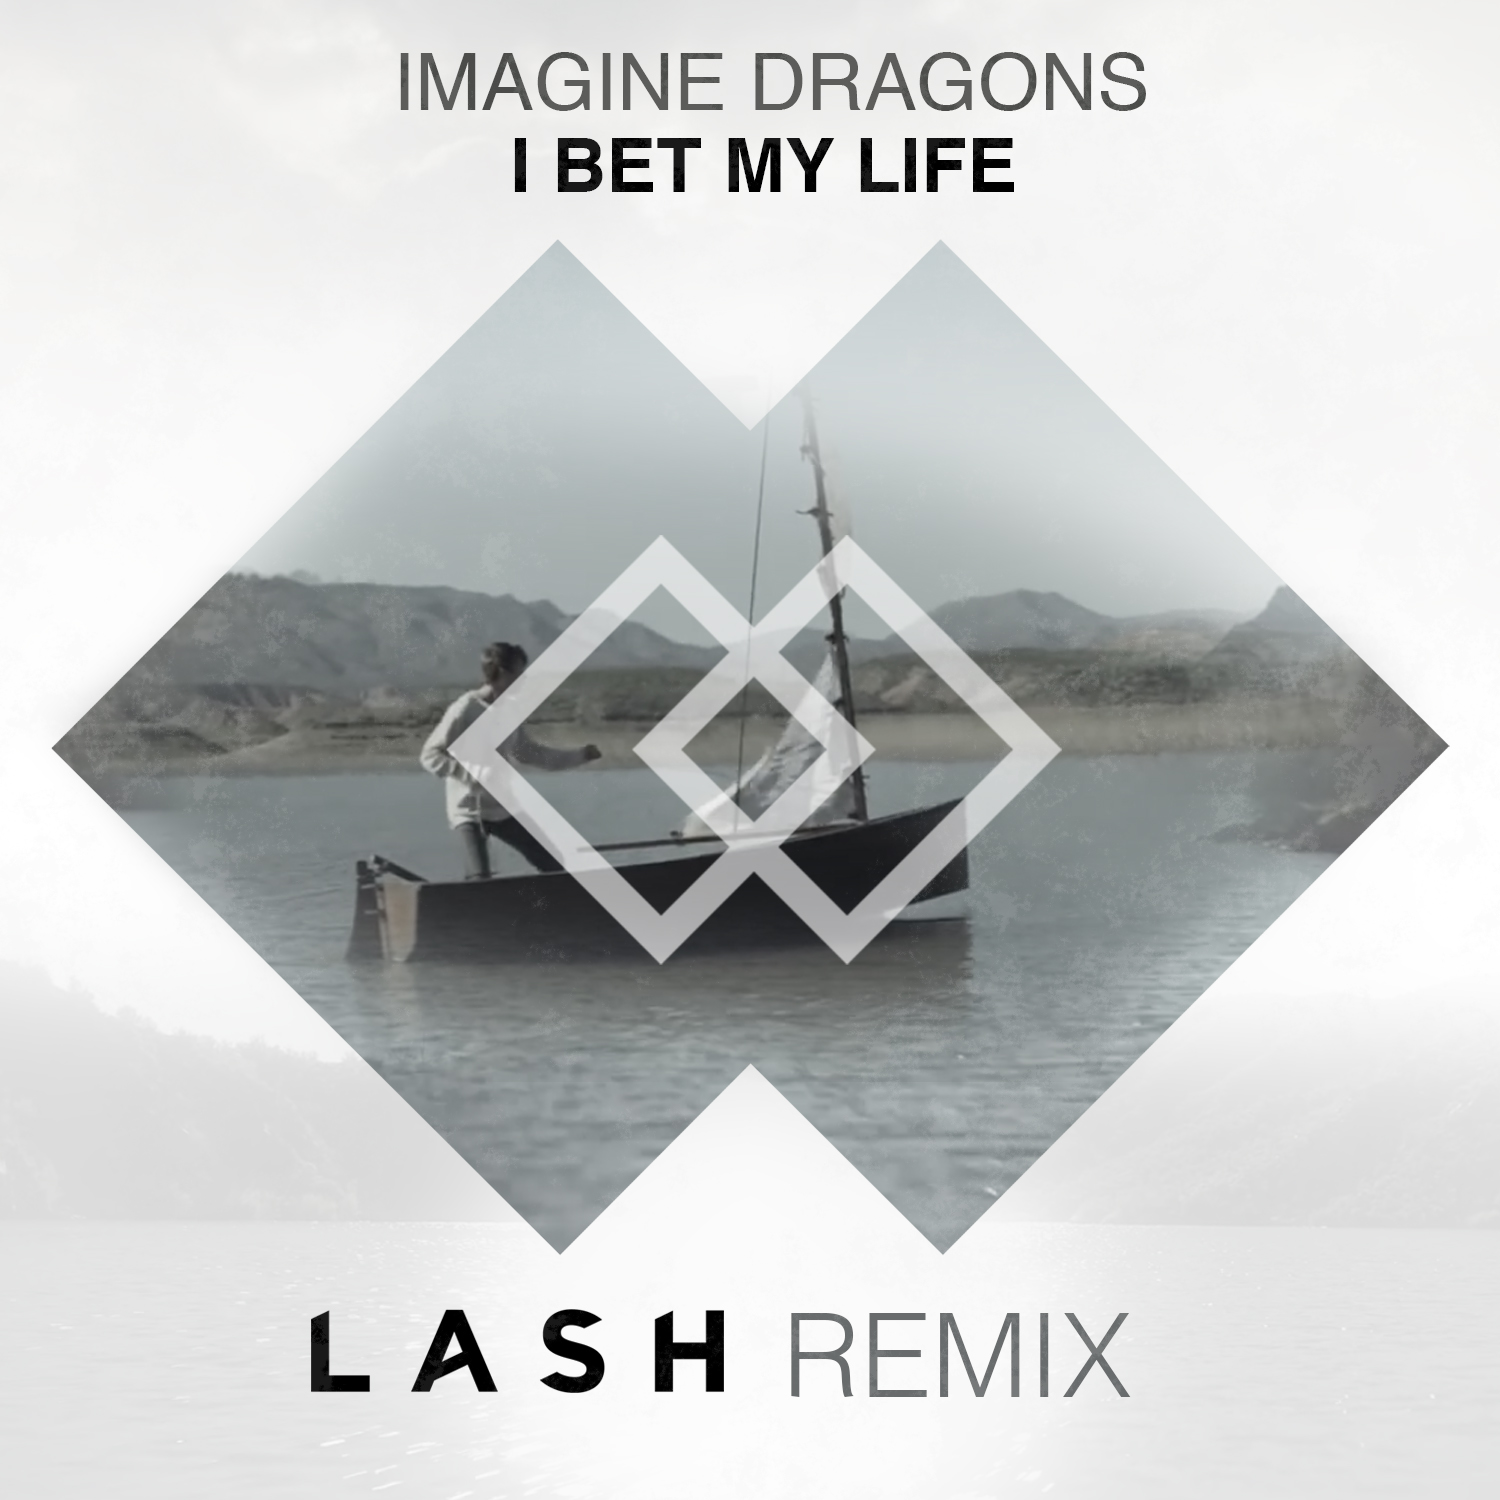 Imaginary life. Imagine the Remixes.